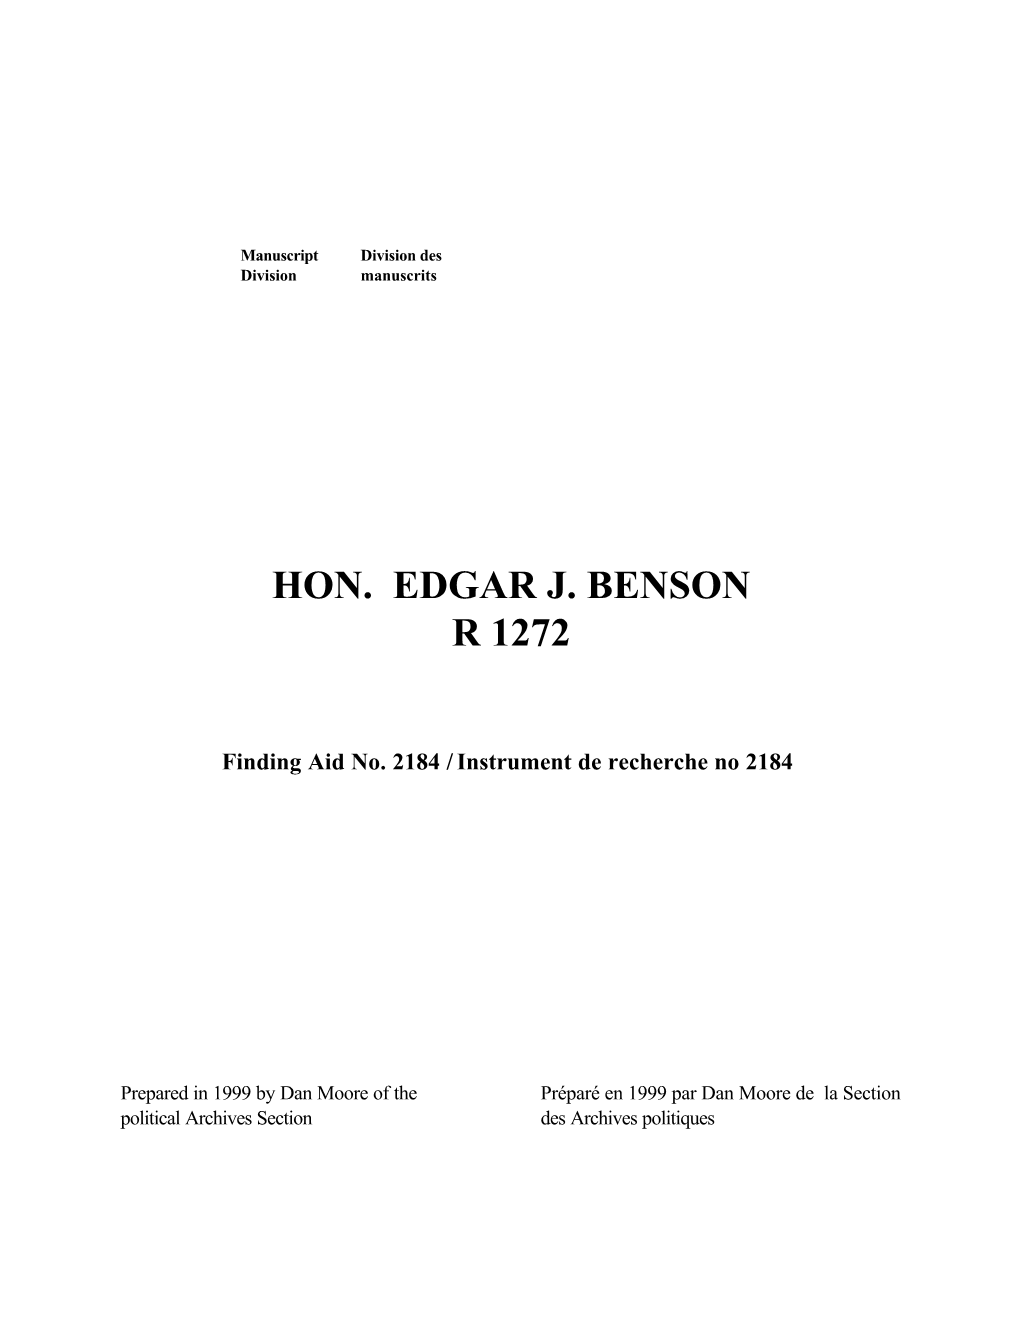 Hon. Edgar J. Benson R 1272